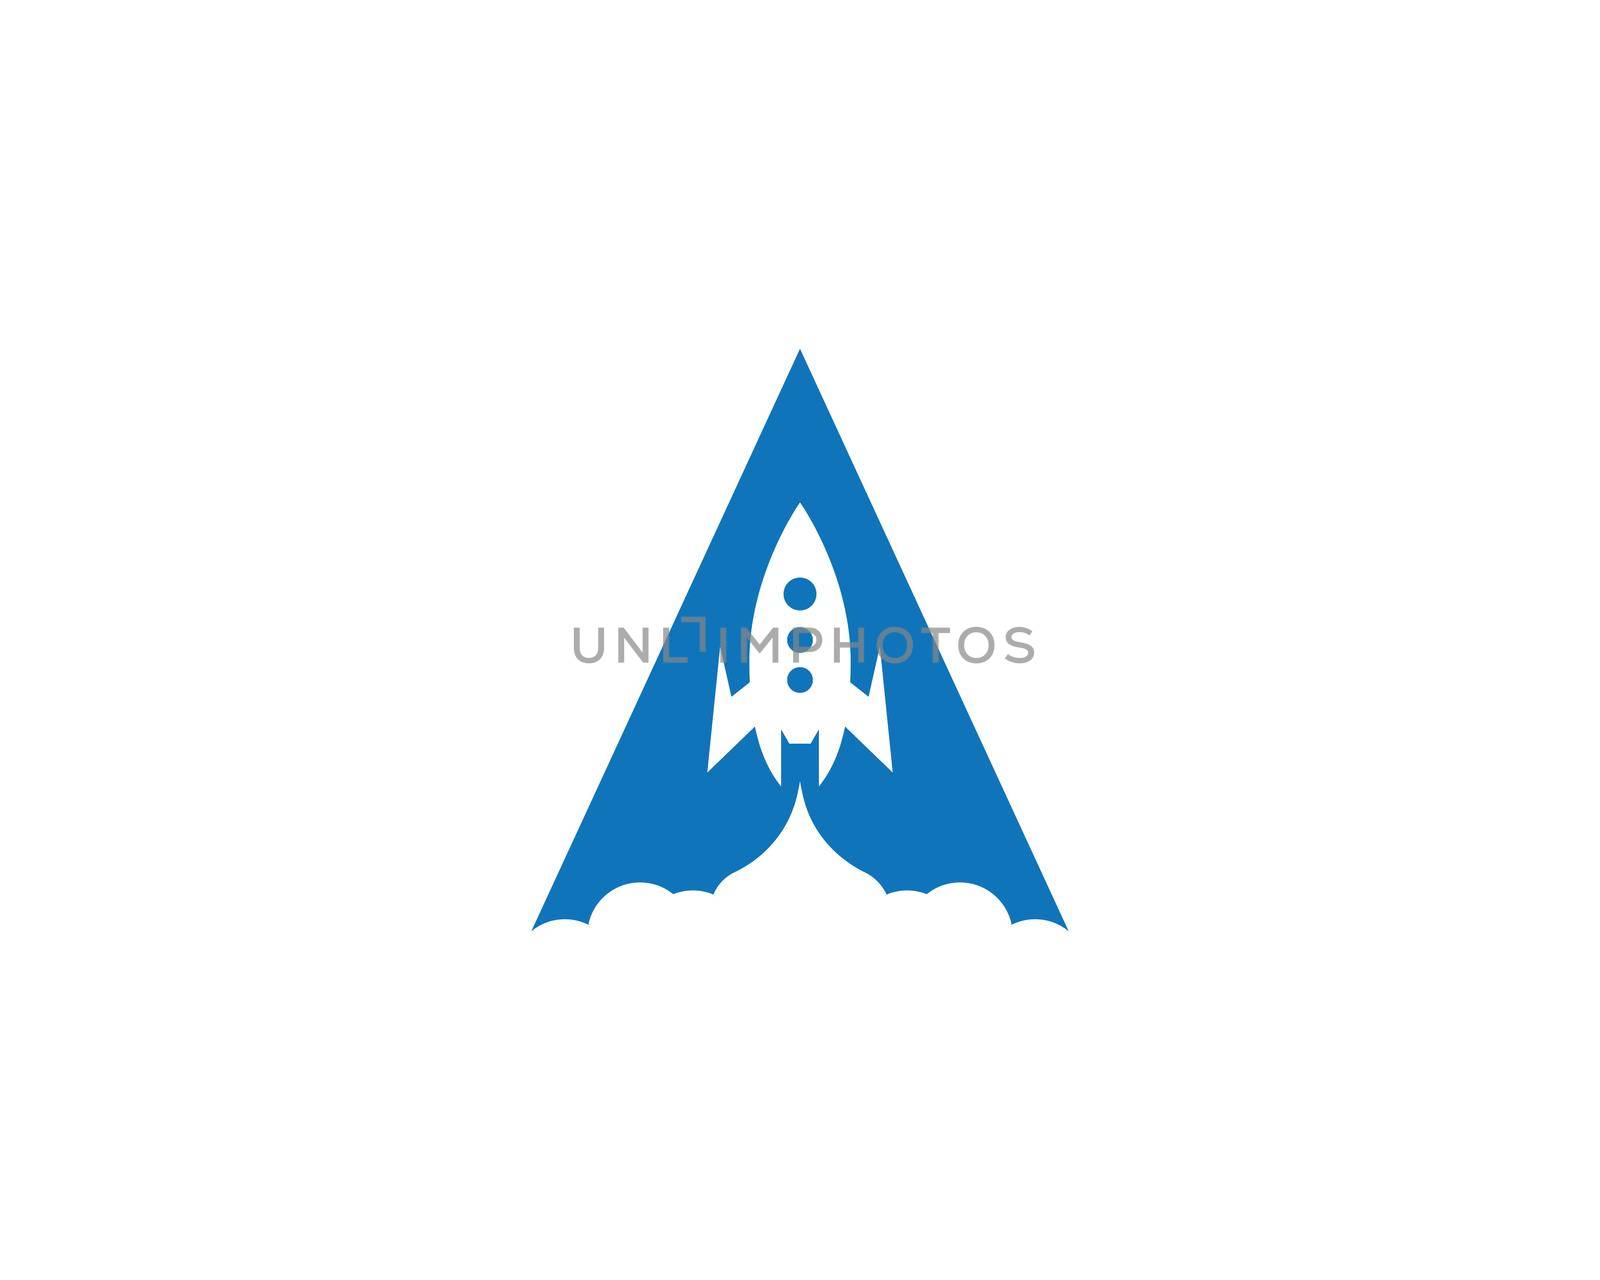 Rocket ilustration logo vector by awk